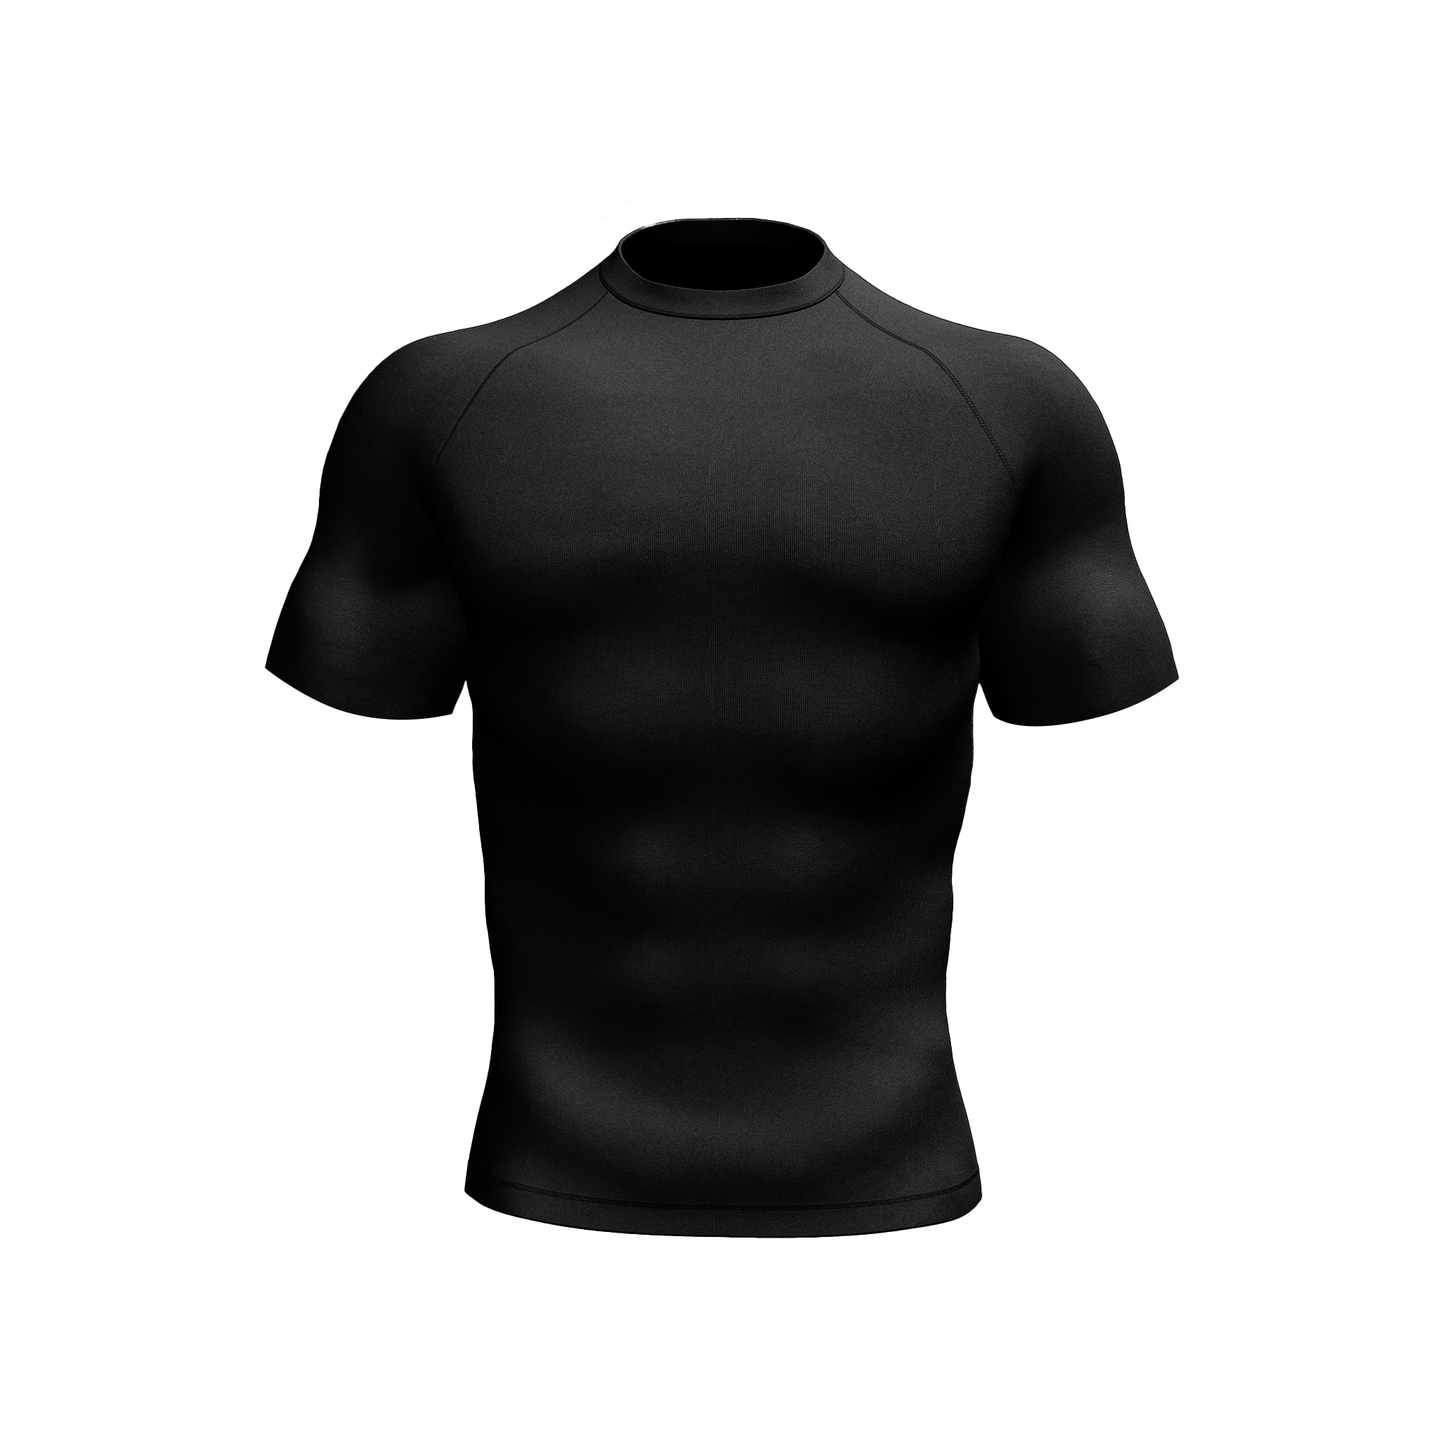 "CRUCIFIER" Black Compression Shirt(Short-sleeves)